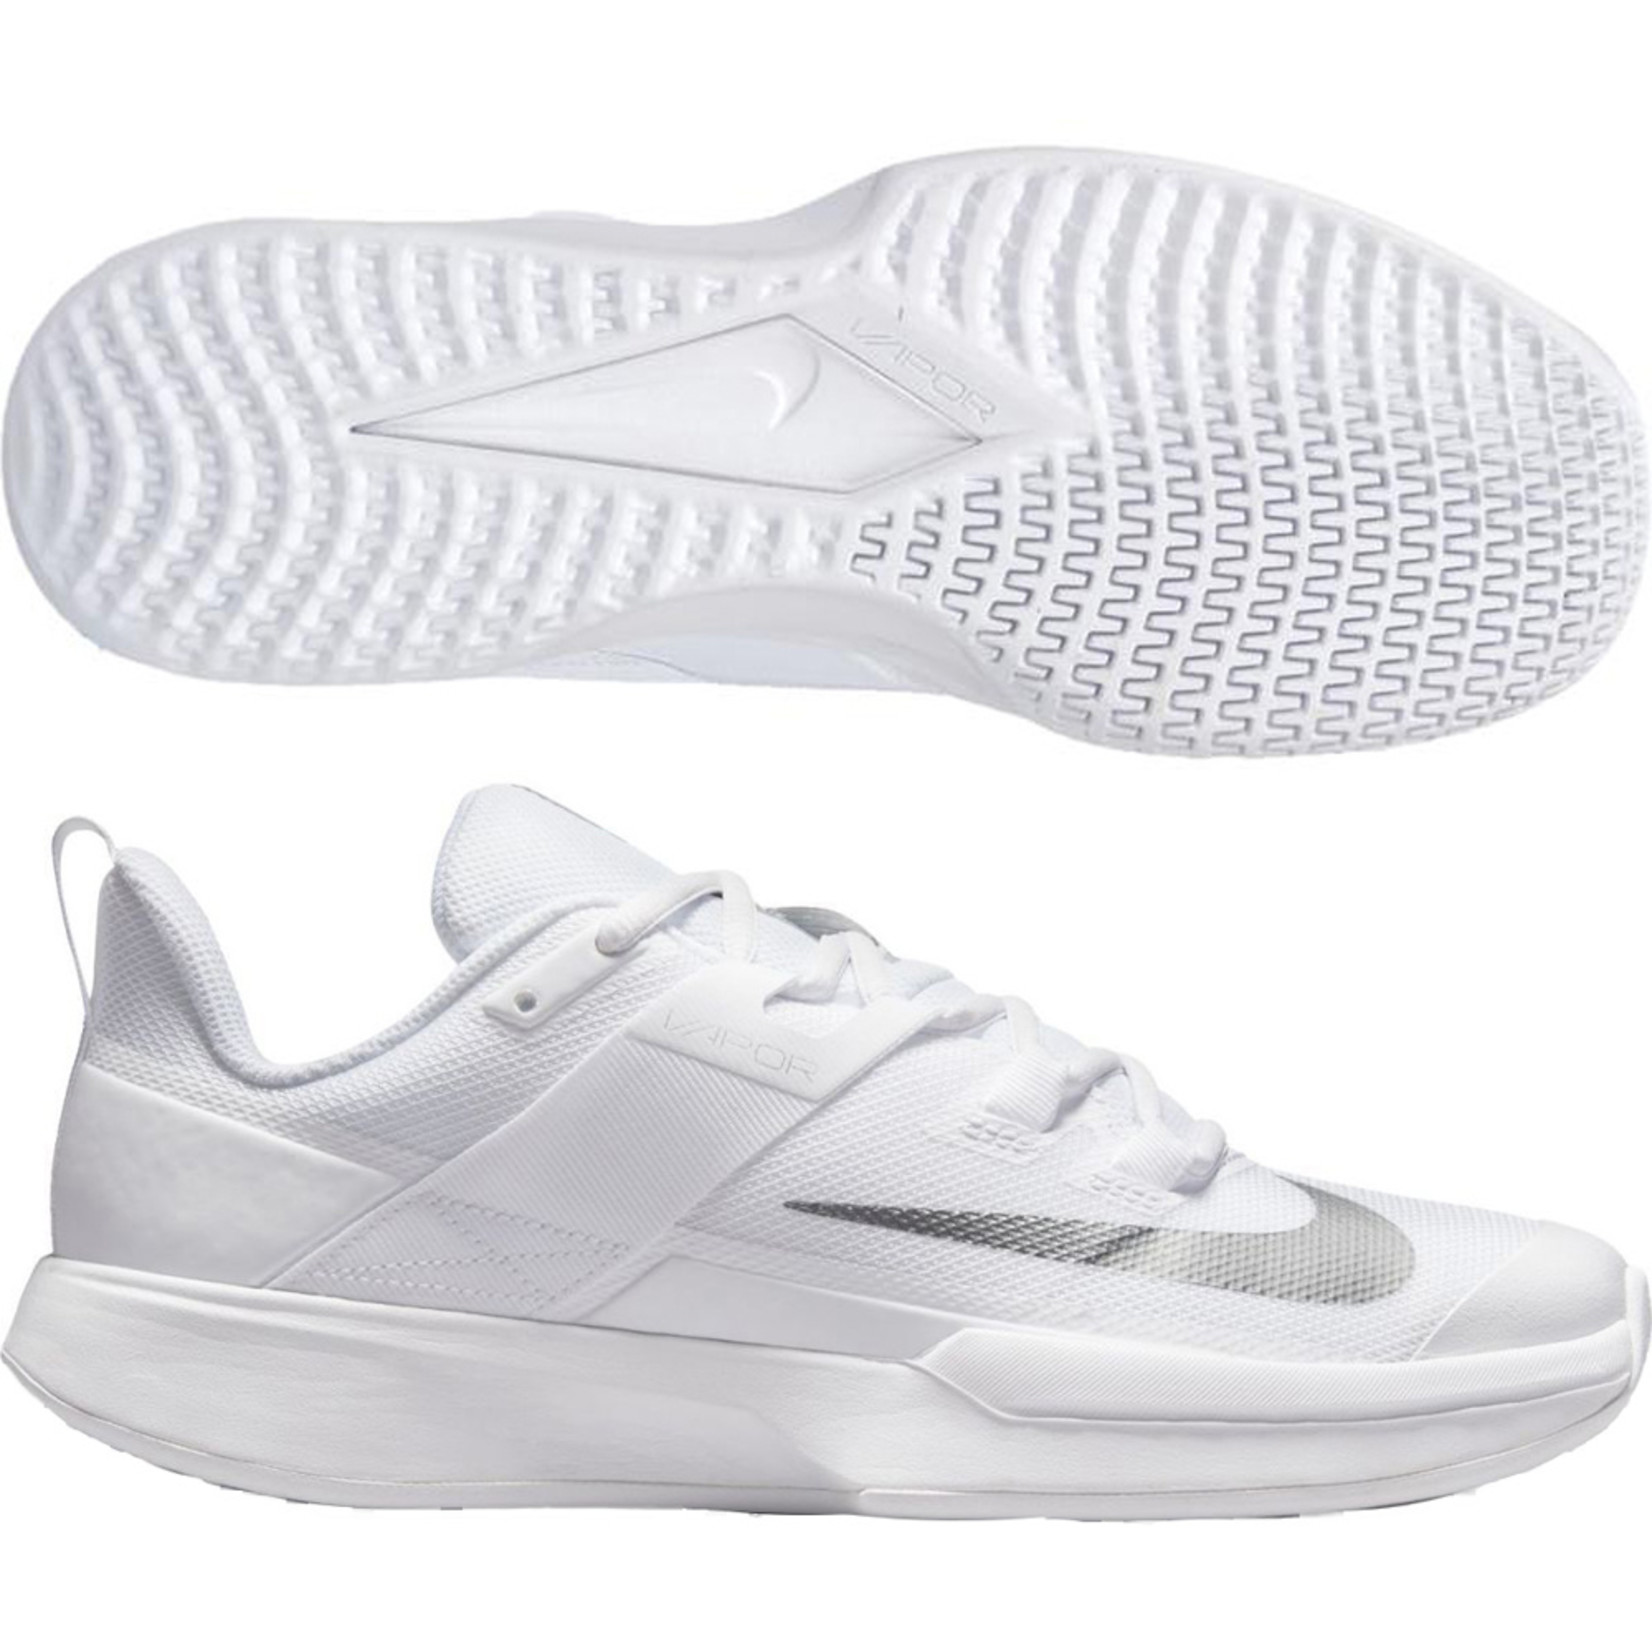 Nike Nike - NikeCourt Vapor Lite Women's Tennis Shoes White/Metallic Silver